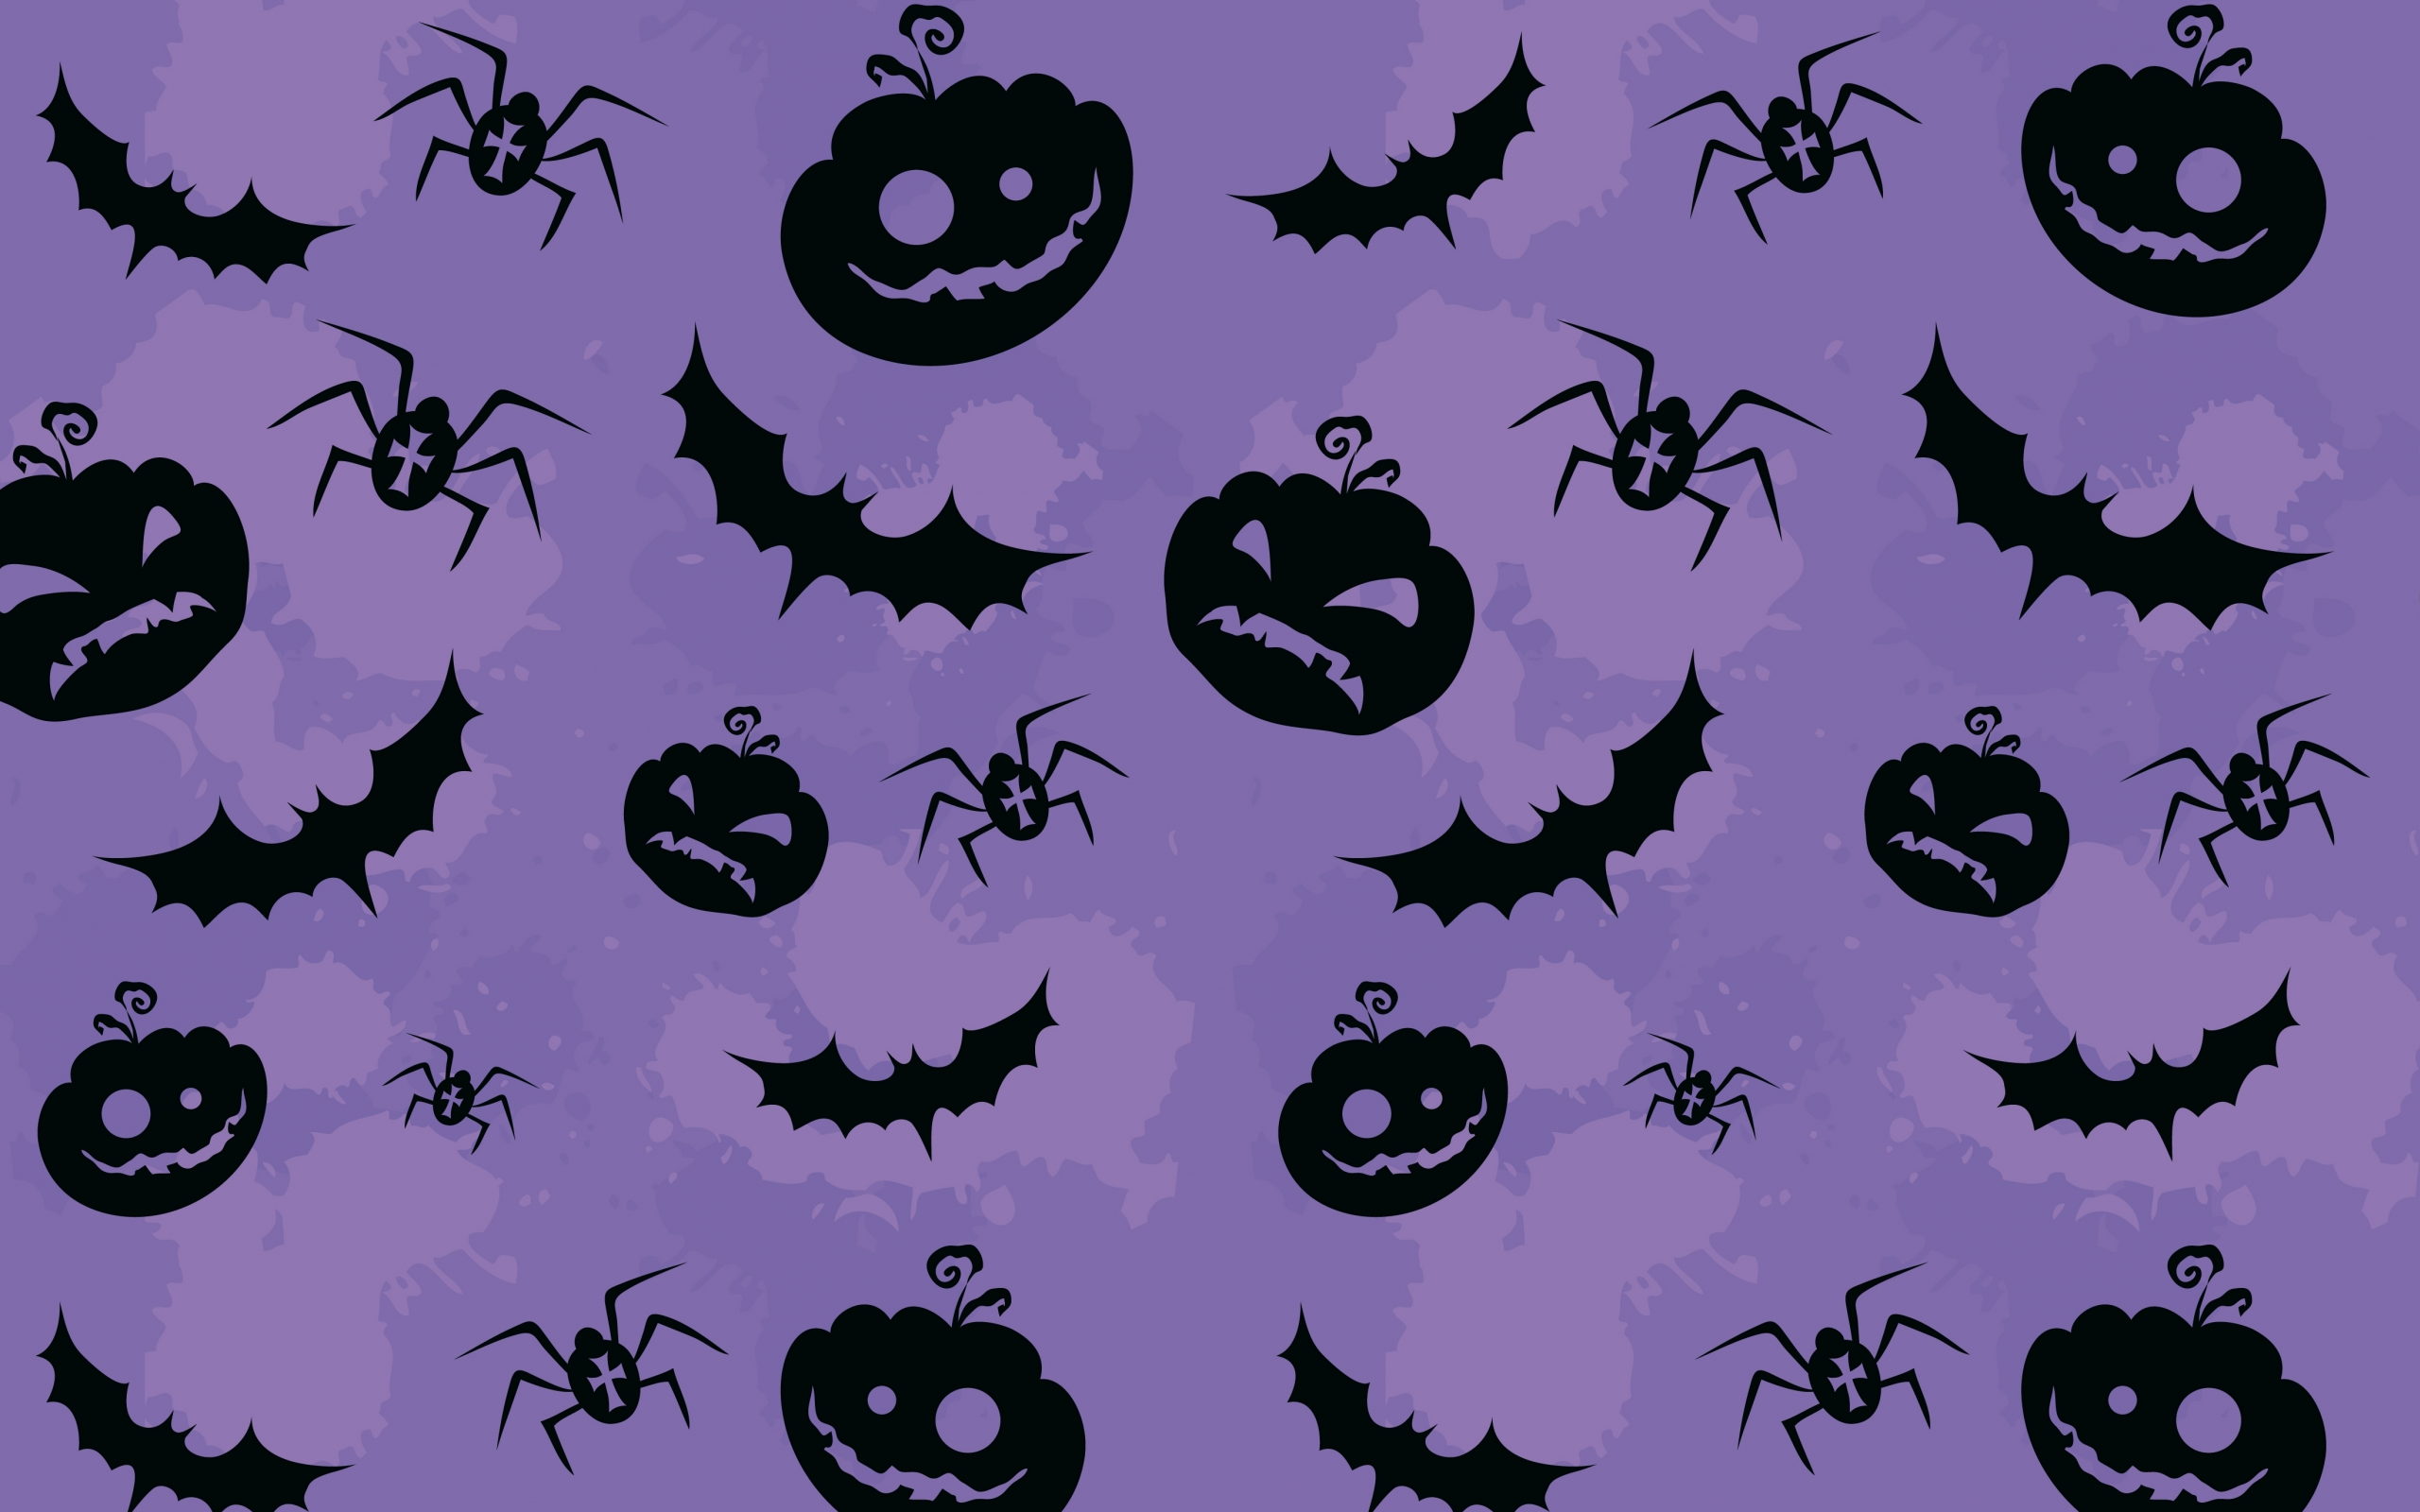 textures, halloween pumpkins, тыквы, creepy, bats and spiders 